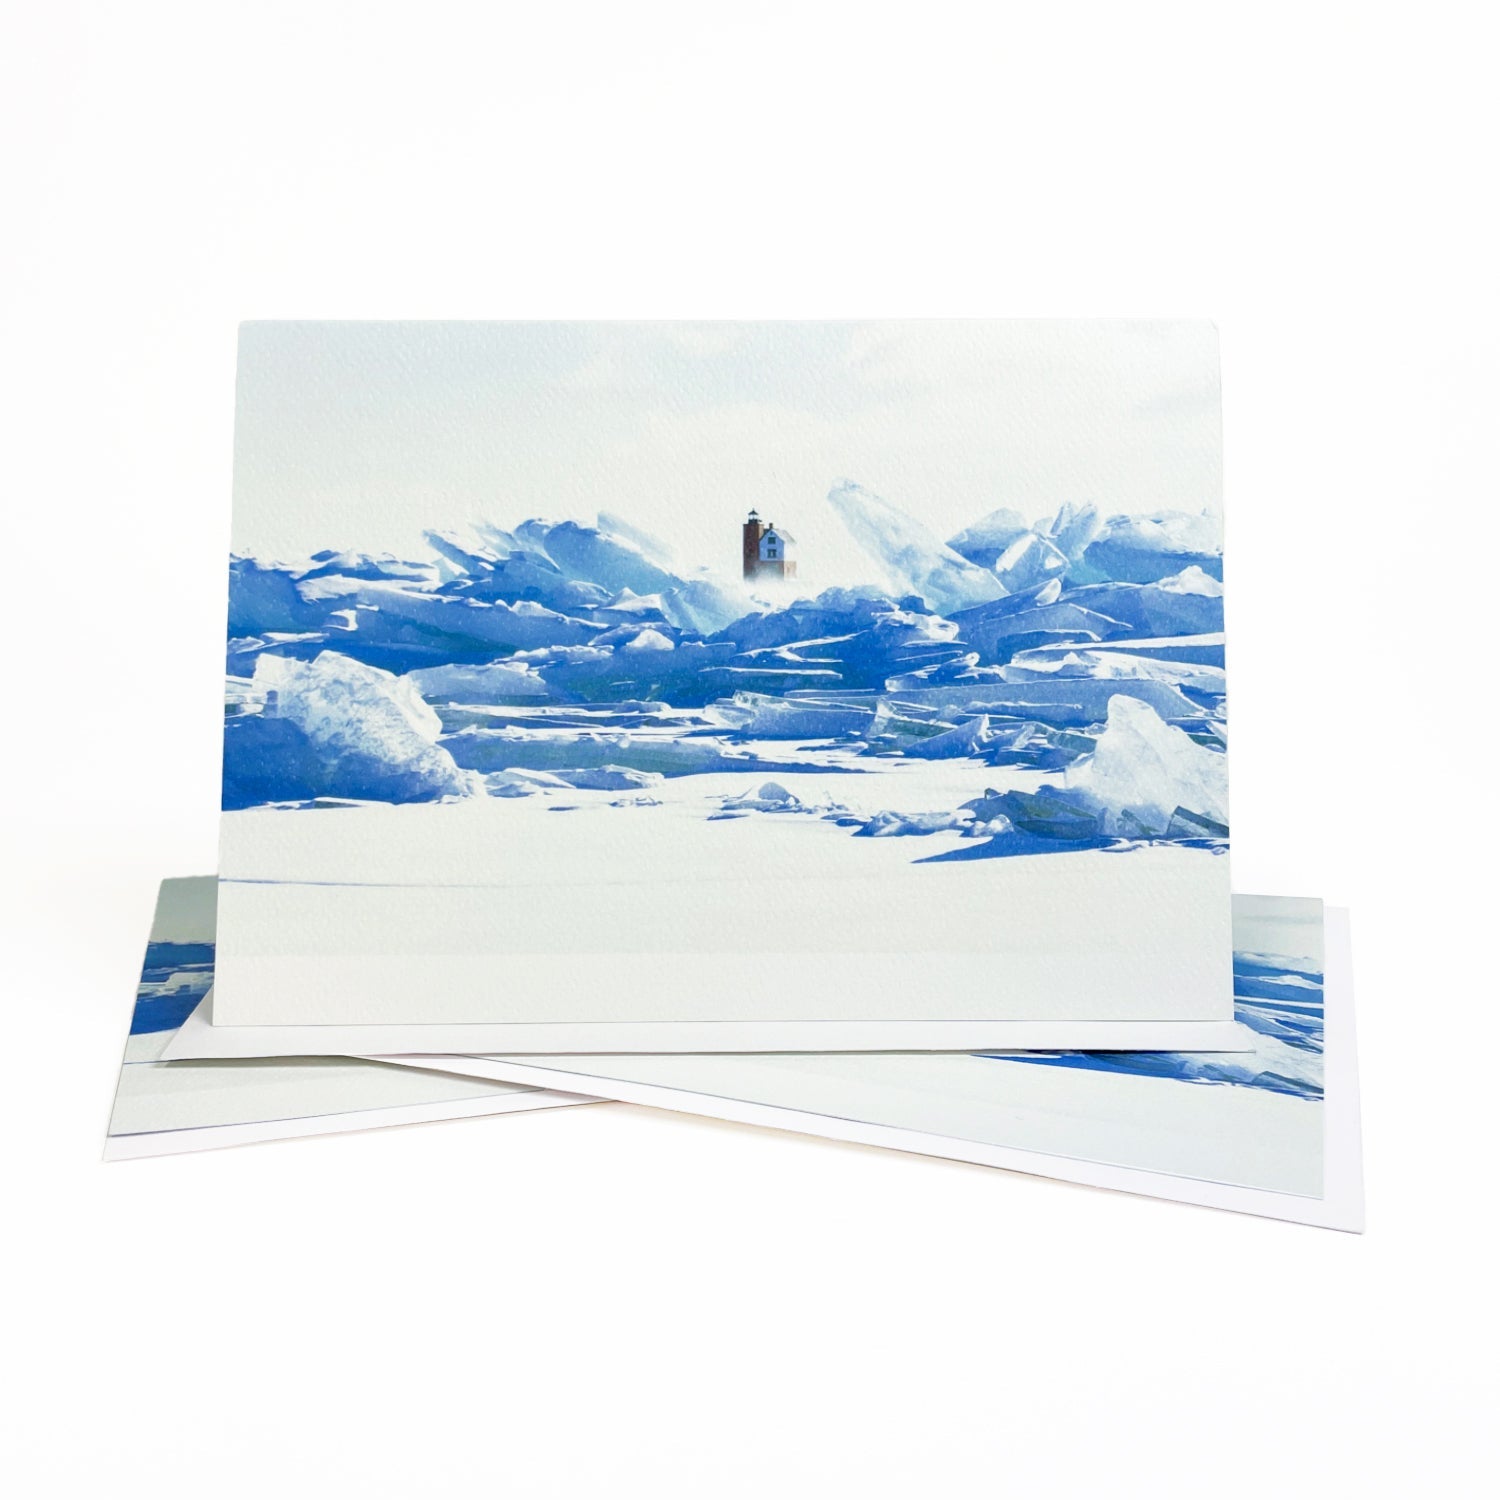 Mist Over Blue Ice Greeting Card by Jennifer Wohletz of Mackinac Memories. 